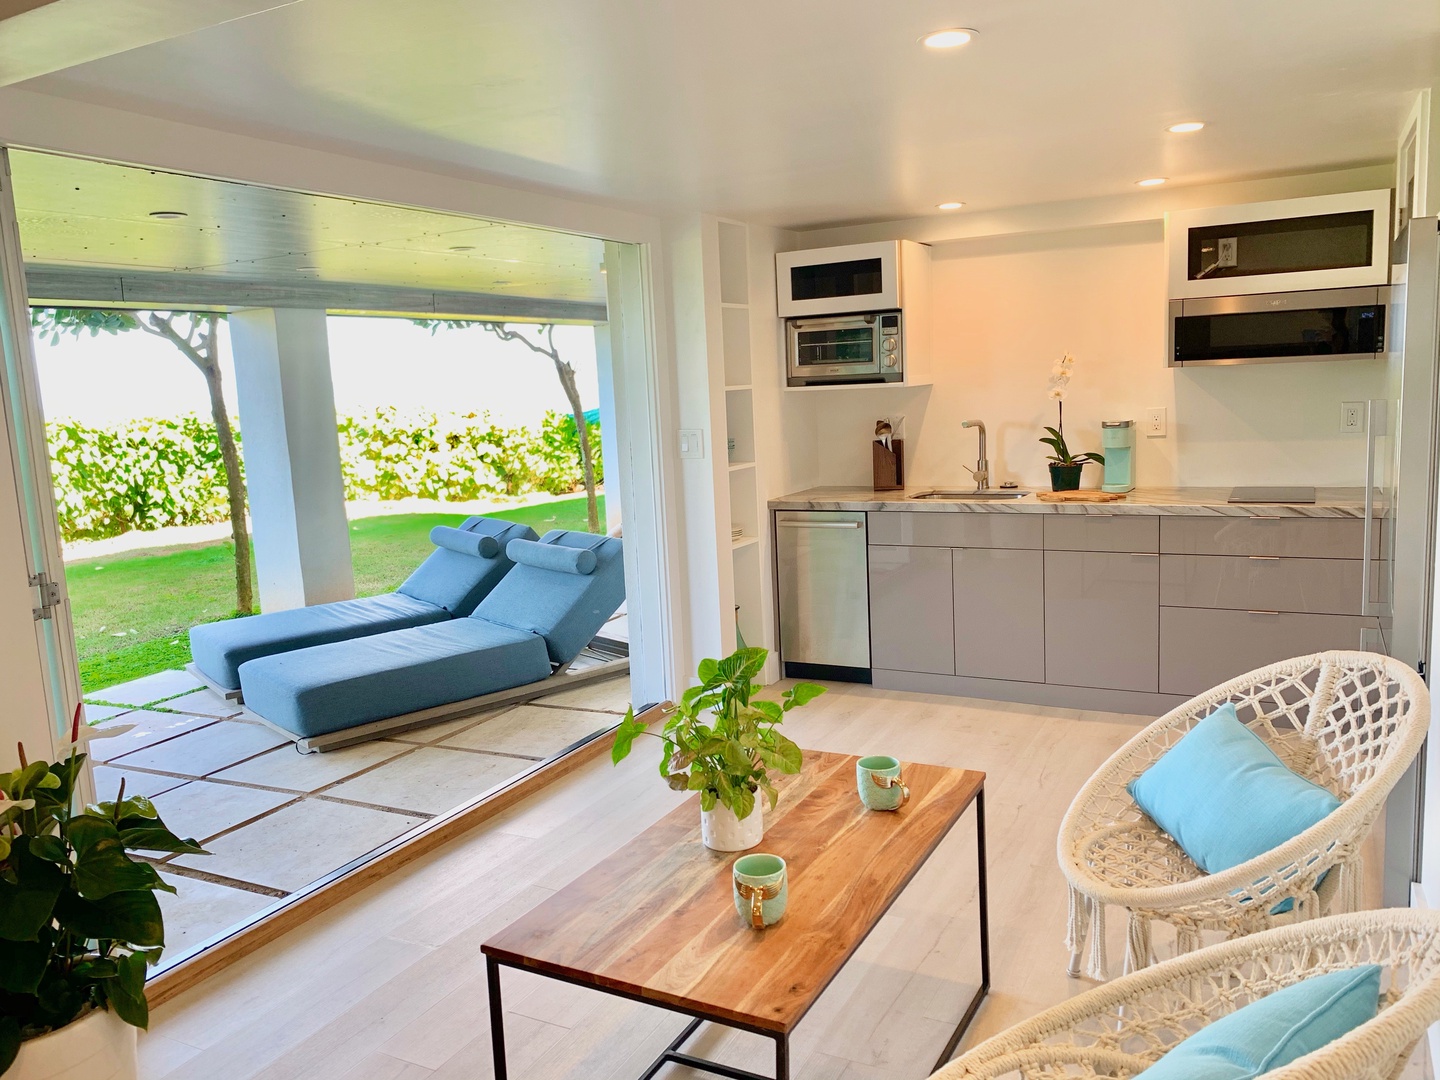 Waialua Vacation Rentals, Sea of Glass* - Downstairs studio kitchen and outdoor lanai